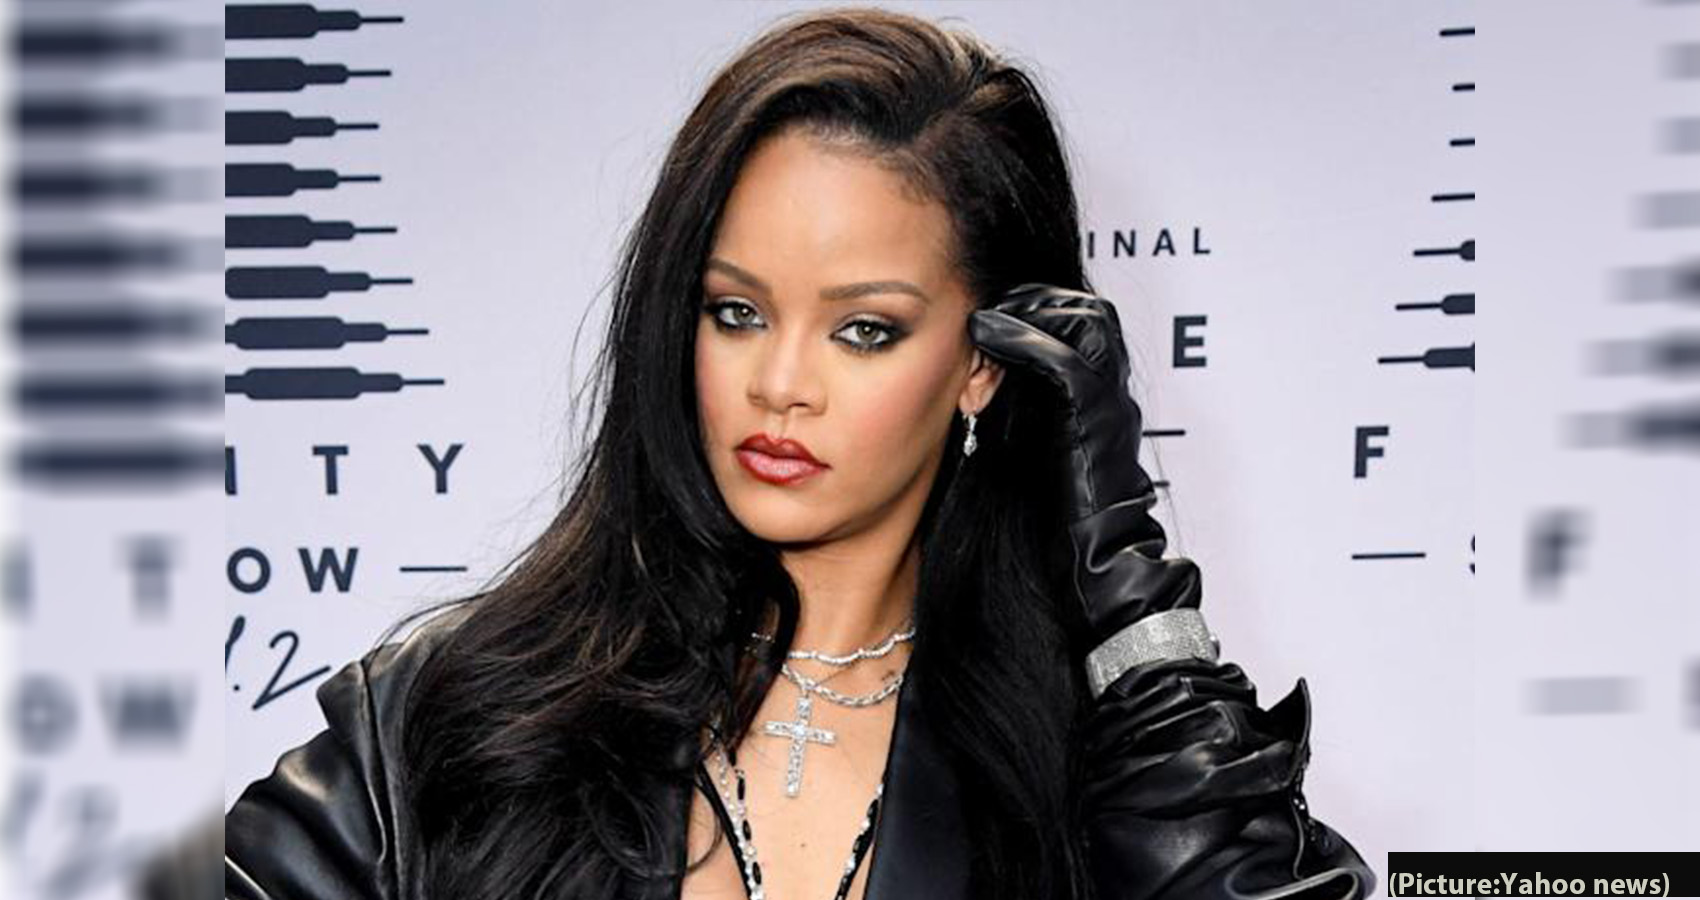 Rihanna, A Billionaire, Is the Richest Female Musician